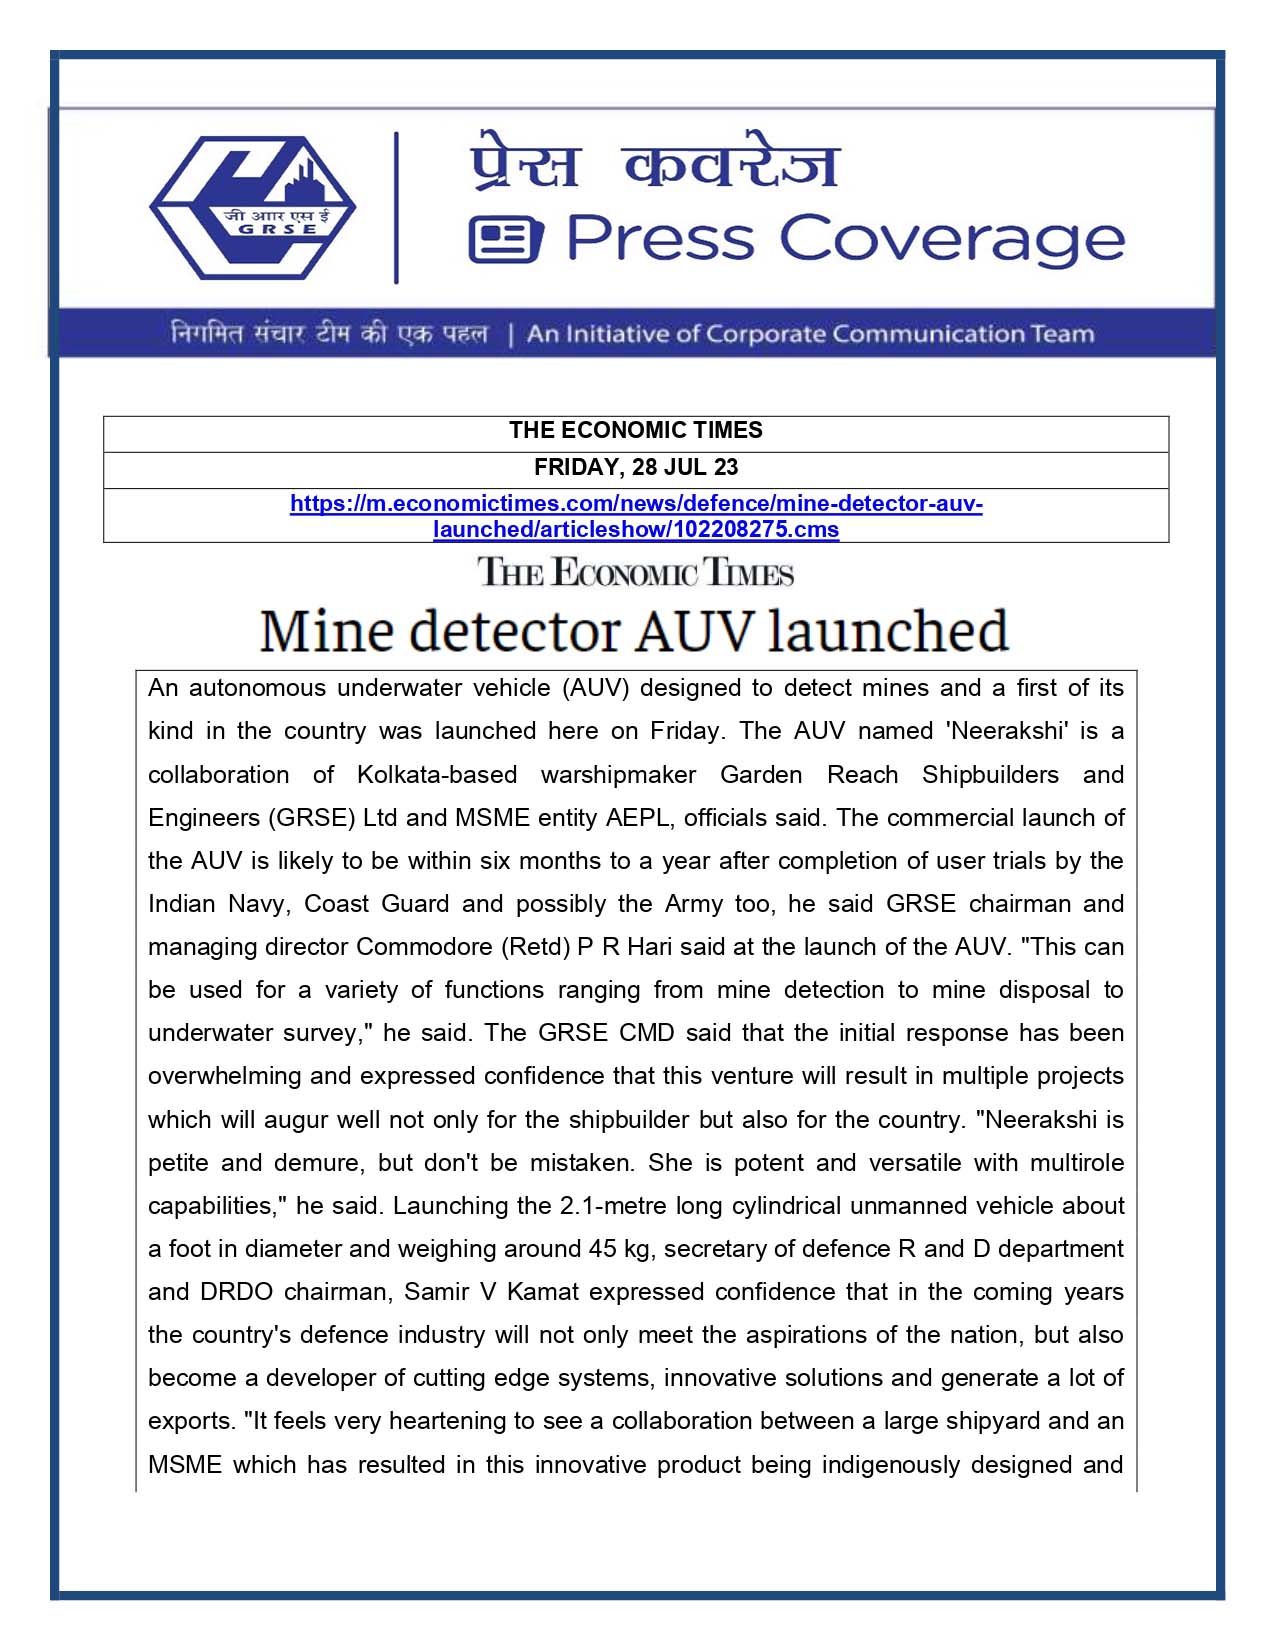 Press Coverage : The Economic Times, 28 Jul 23 : Mine Detector AUV Launched